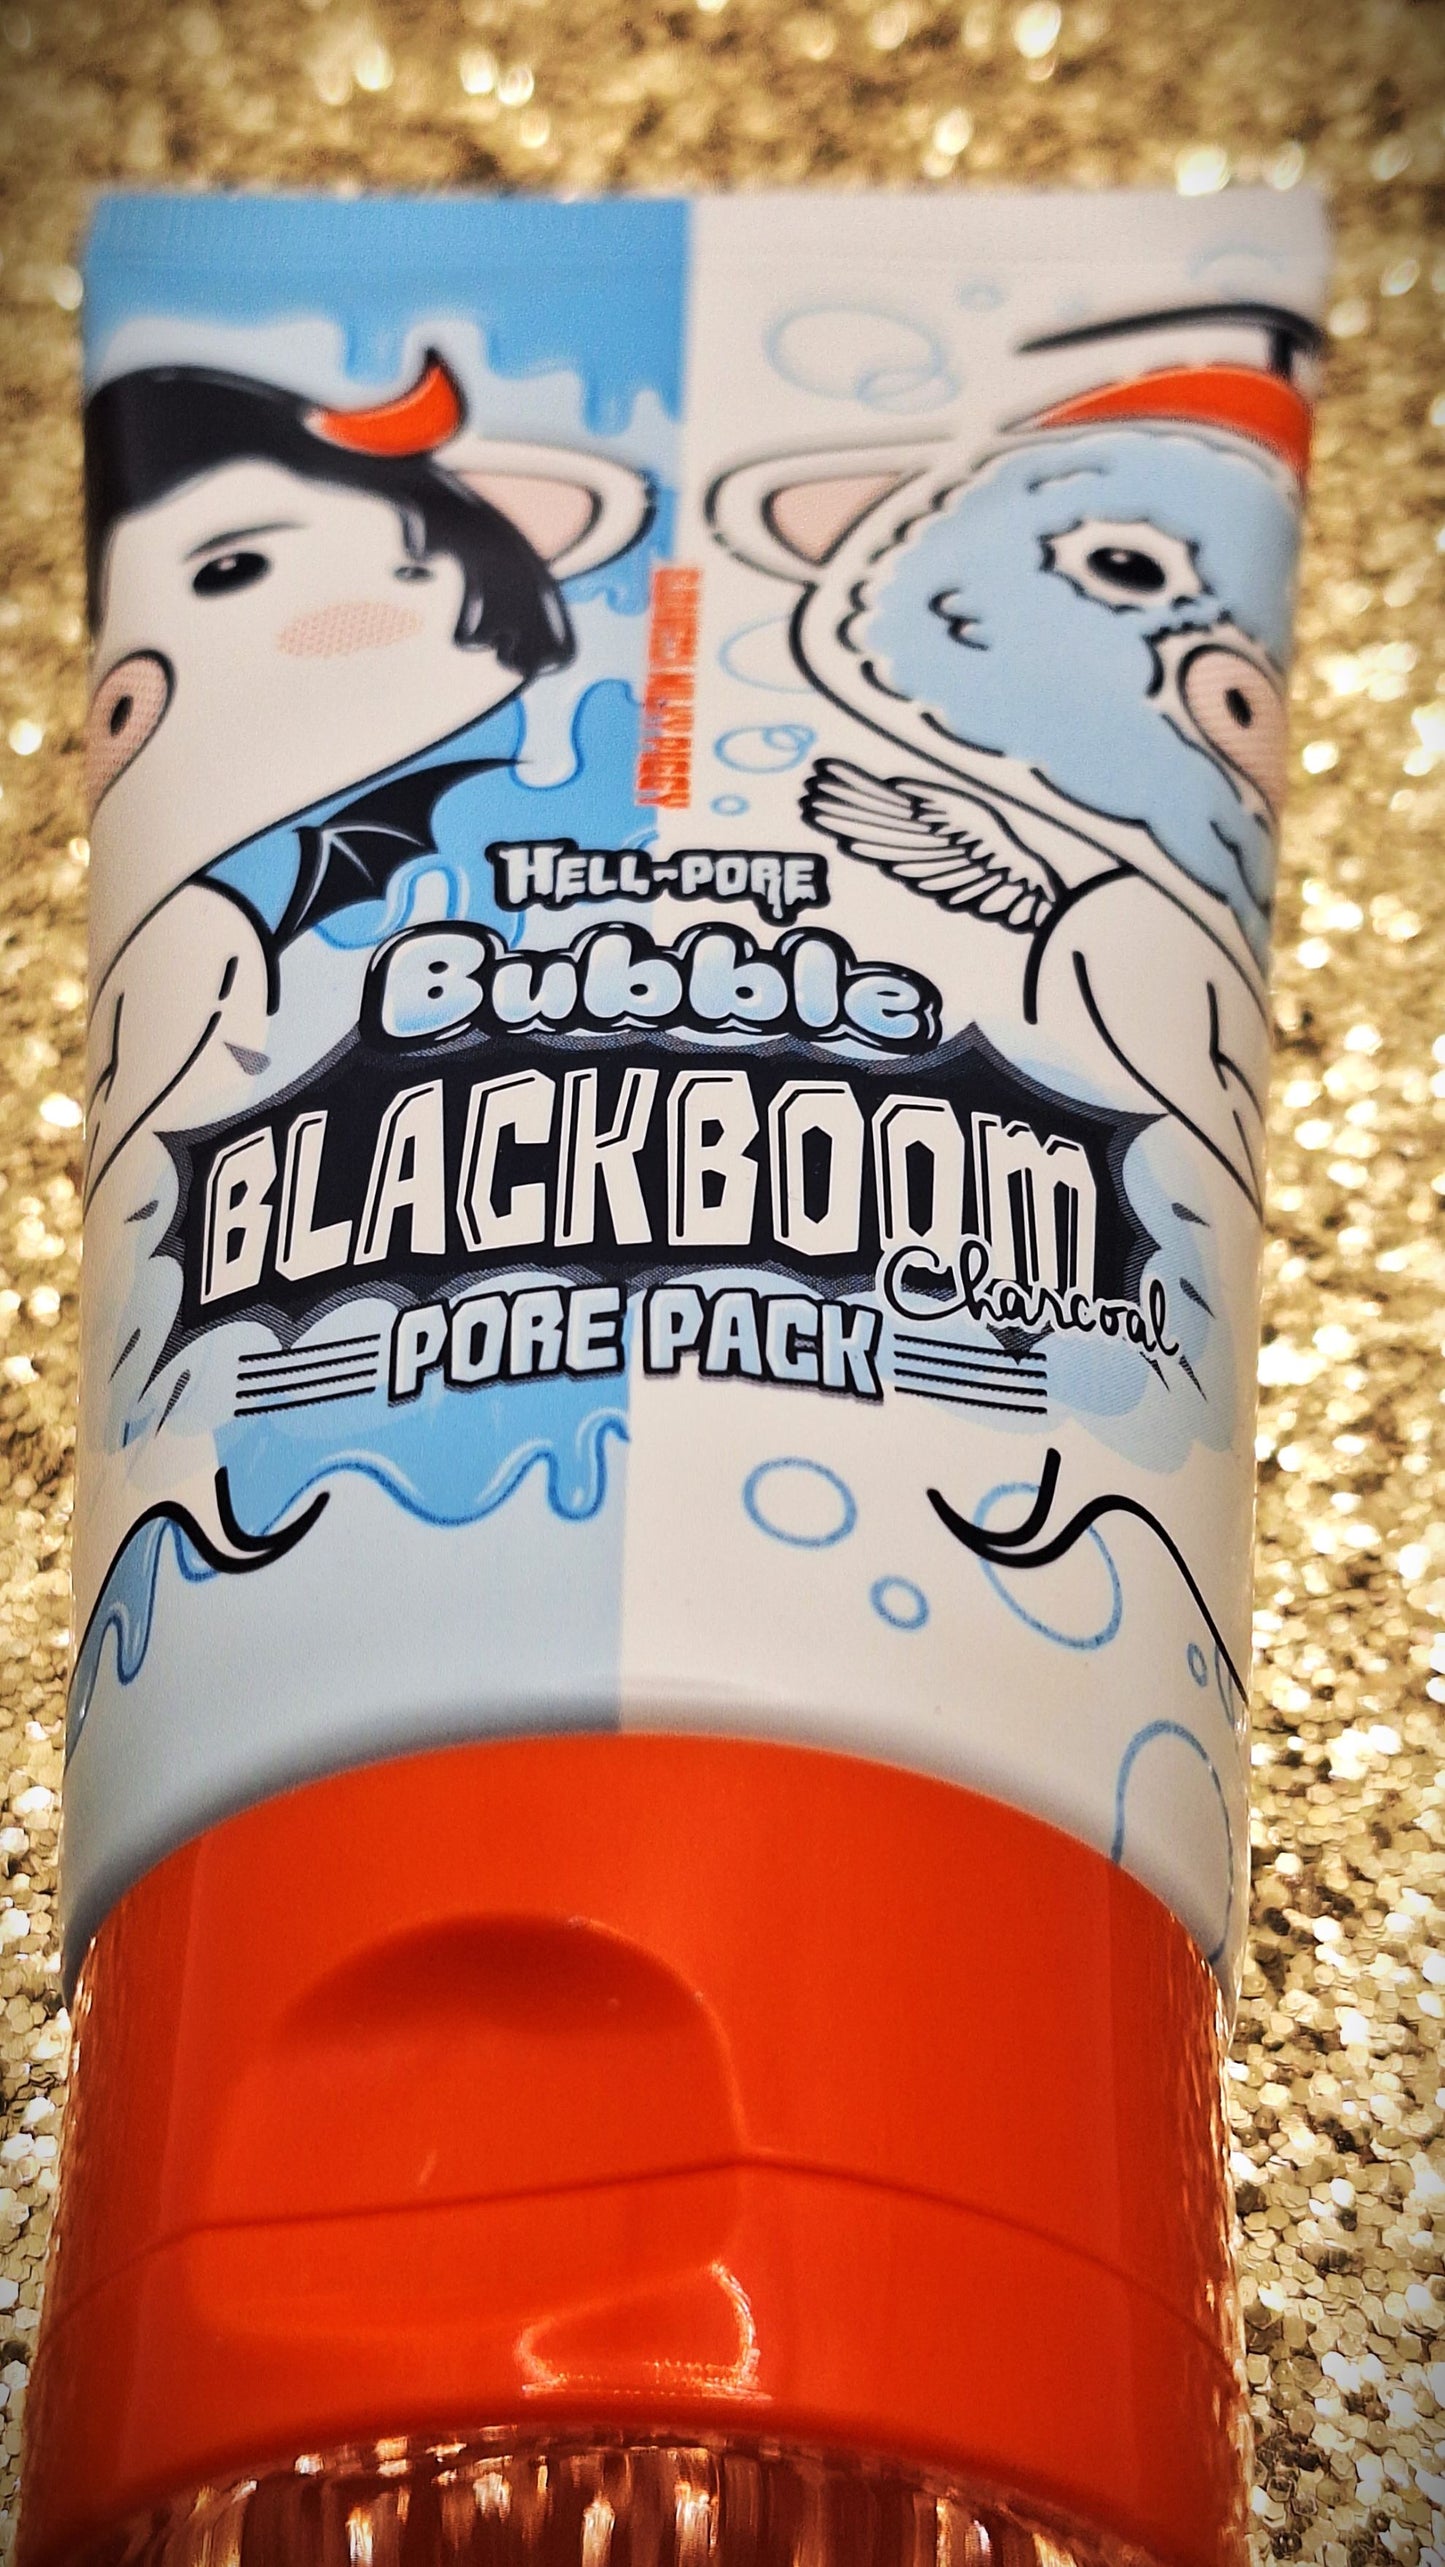 Bubble Blackboom Charcoal Pore Pack